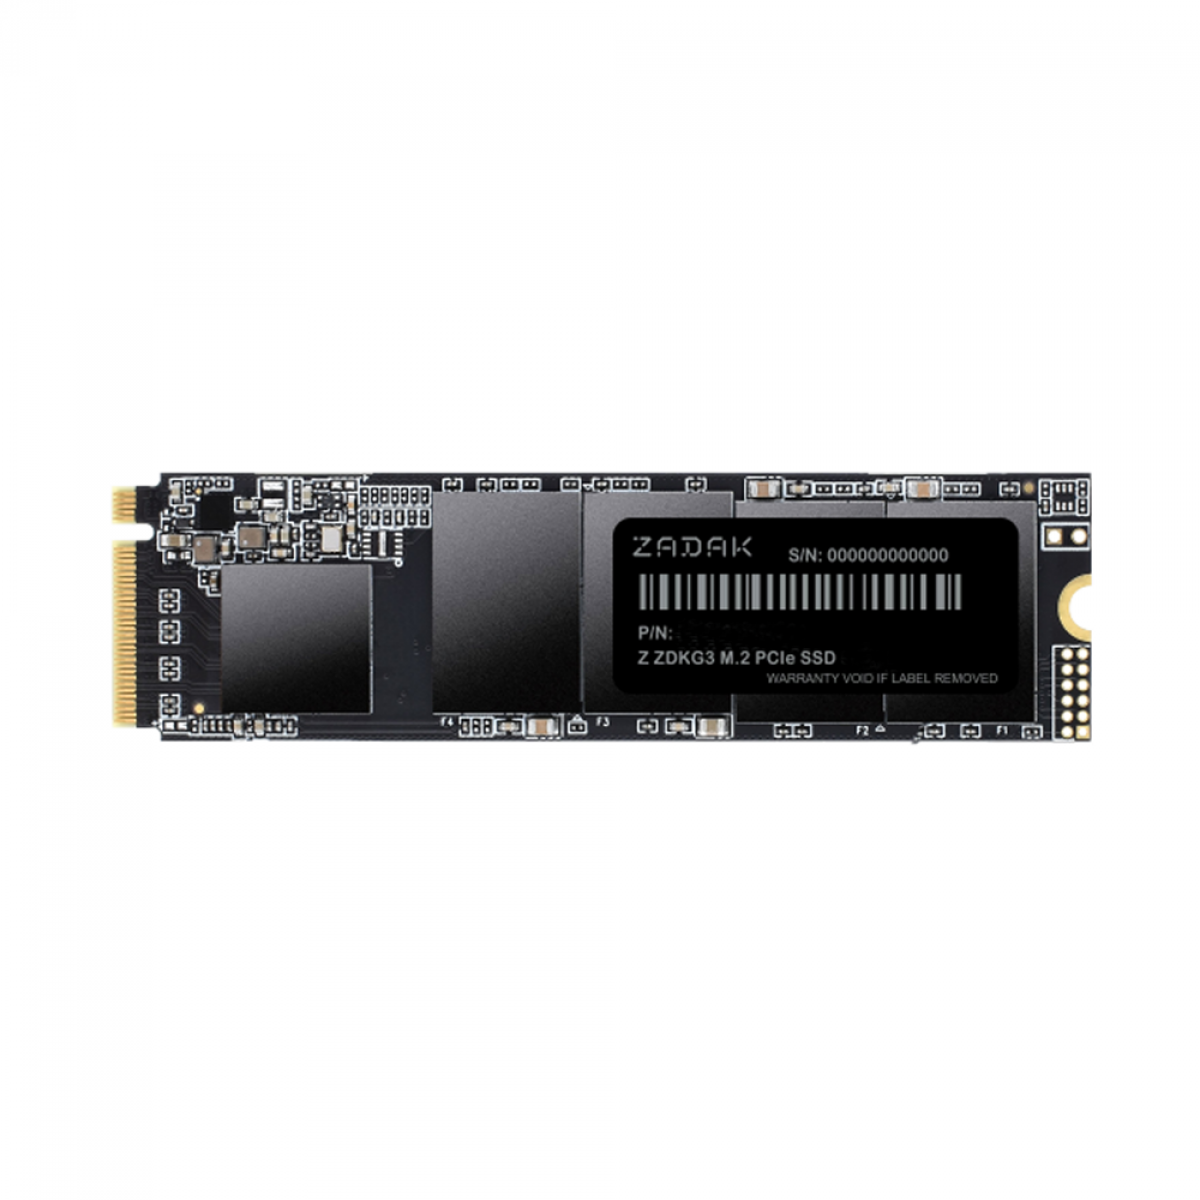 SSD Zadak ZDKG3 512GB, PCIe Gen 3x4 M.2 NVMe, Leitura 2100MBs e Gravação 1500MBs, ZS512GZDKG3-1